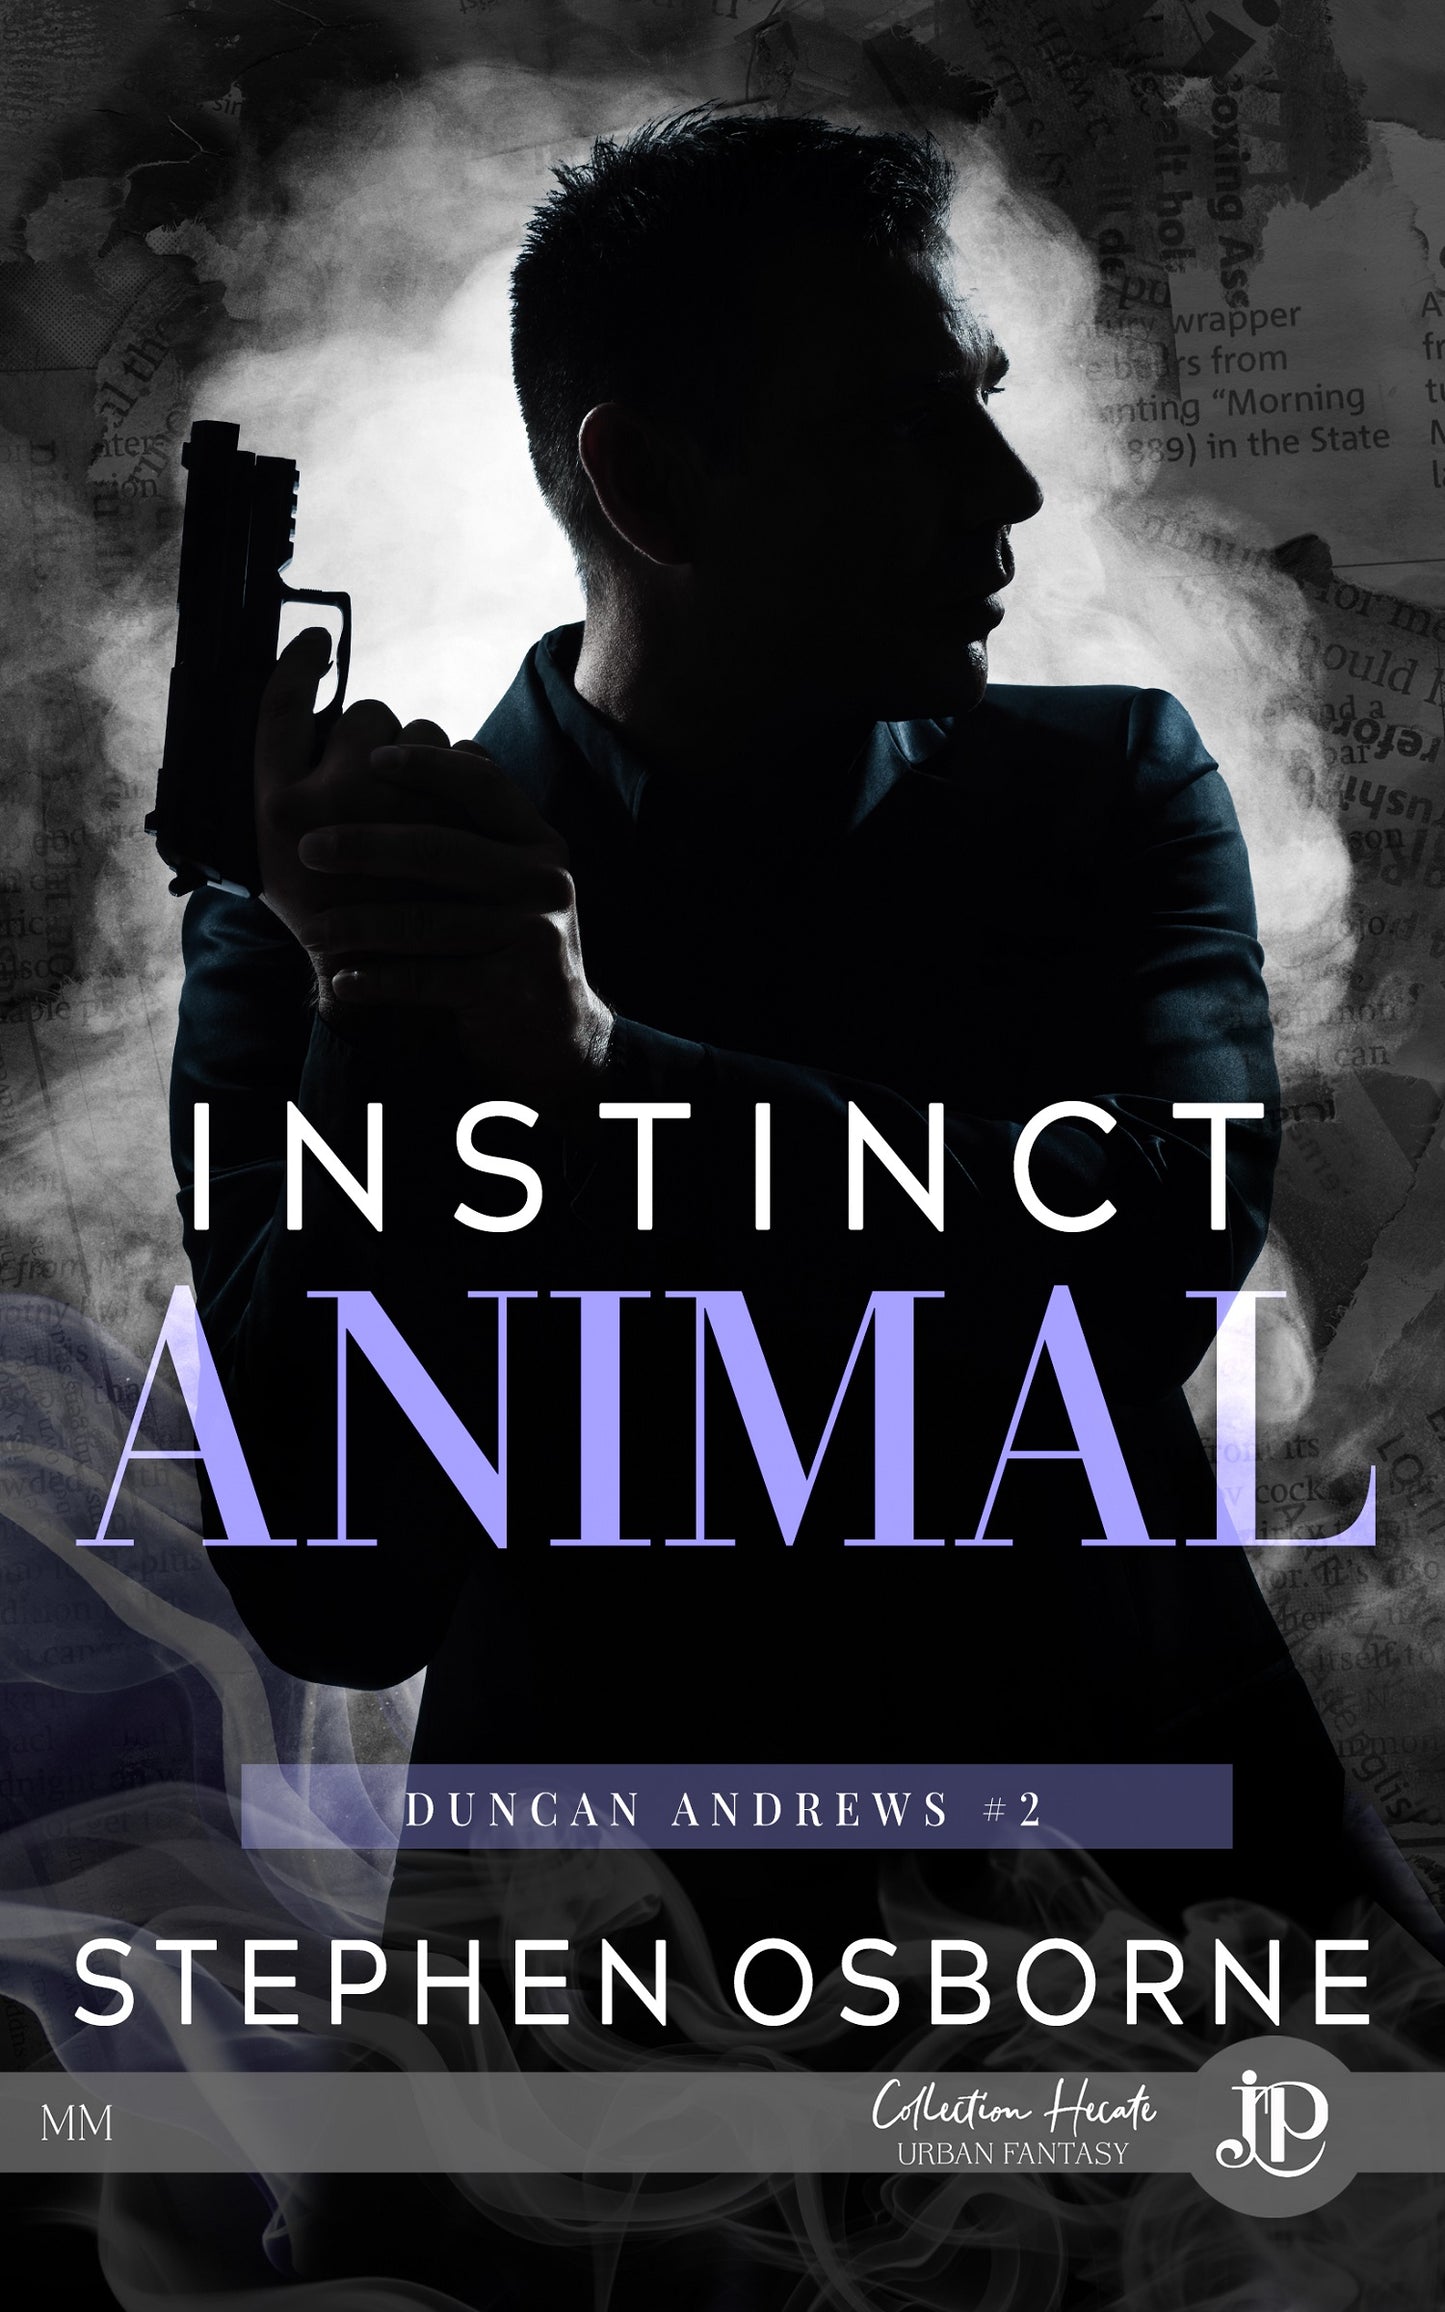 Duncan Andrews #2 : Instinct animal